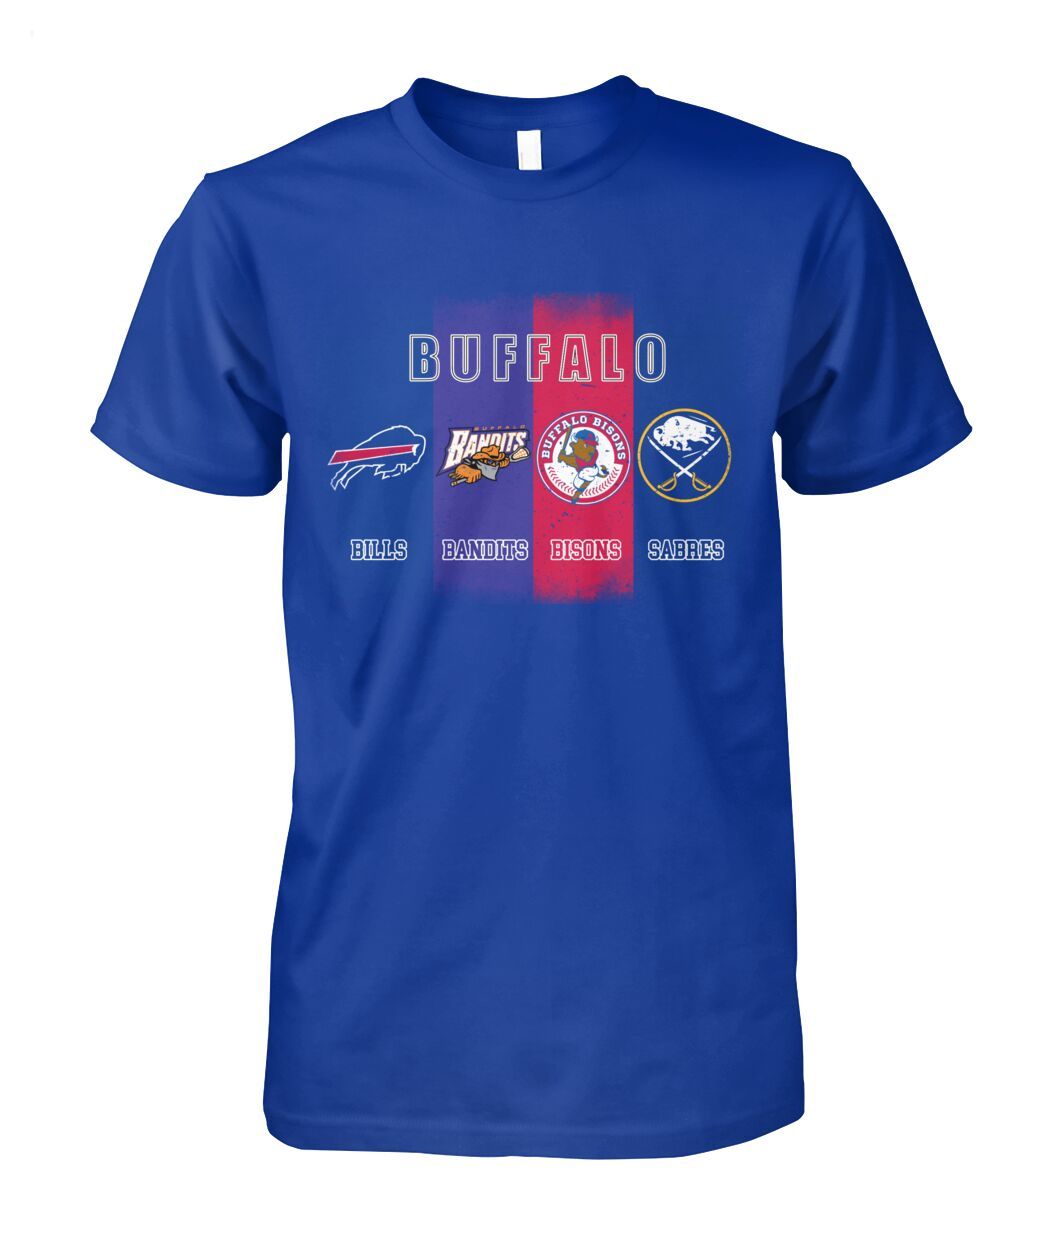 Buffalo Sabres Buffalo Bandits Buffalo Bills t-shirt by To-Tee